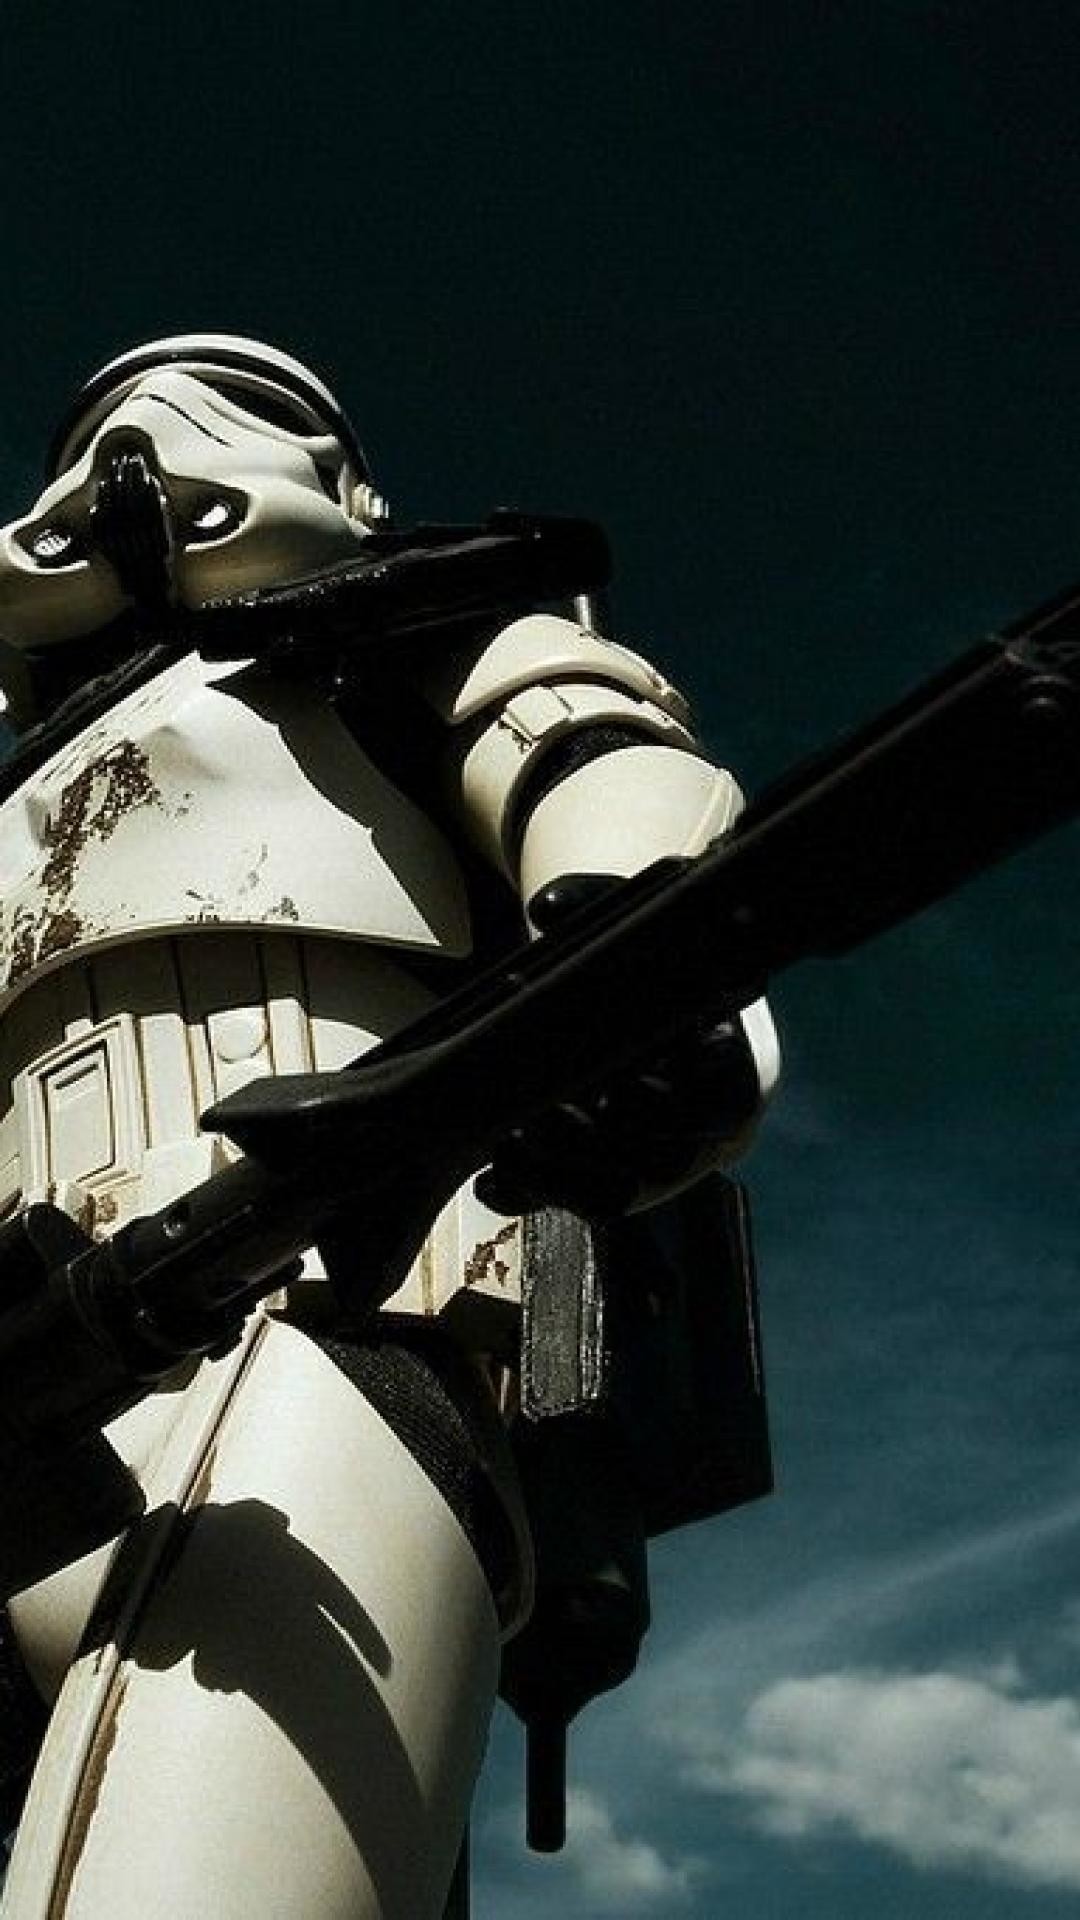 1080x1920 Star wars stormtroopers galactic empire storm trooper wallpaper .